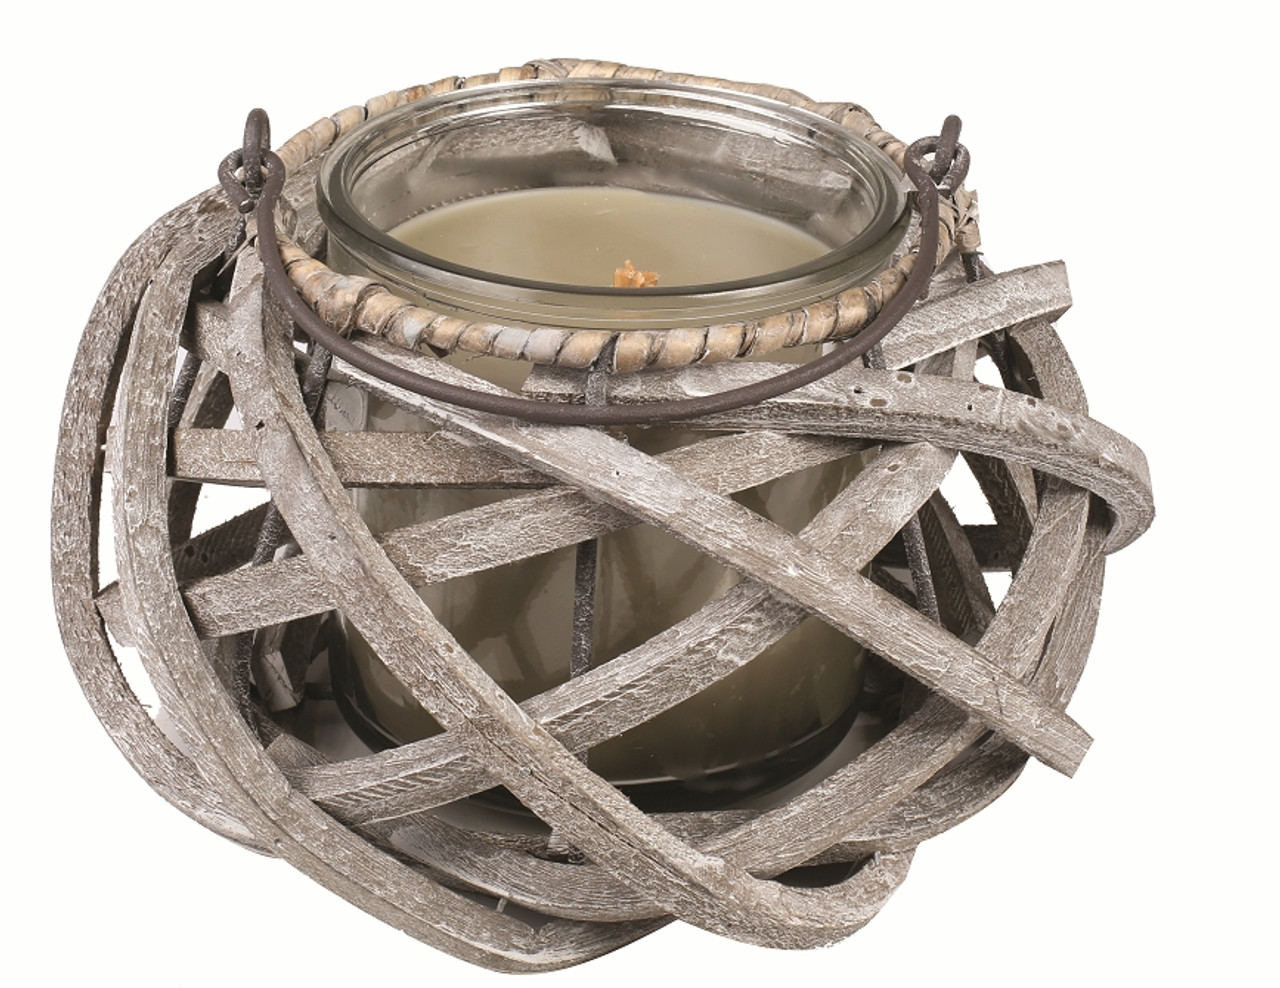 WoodWick Fireside Lantern Premium WoodWick Candle-The Lamp Stand